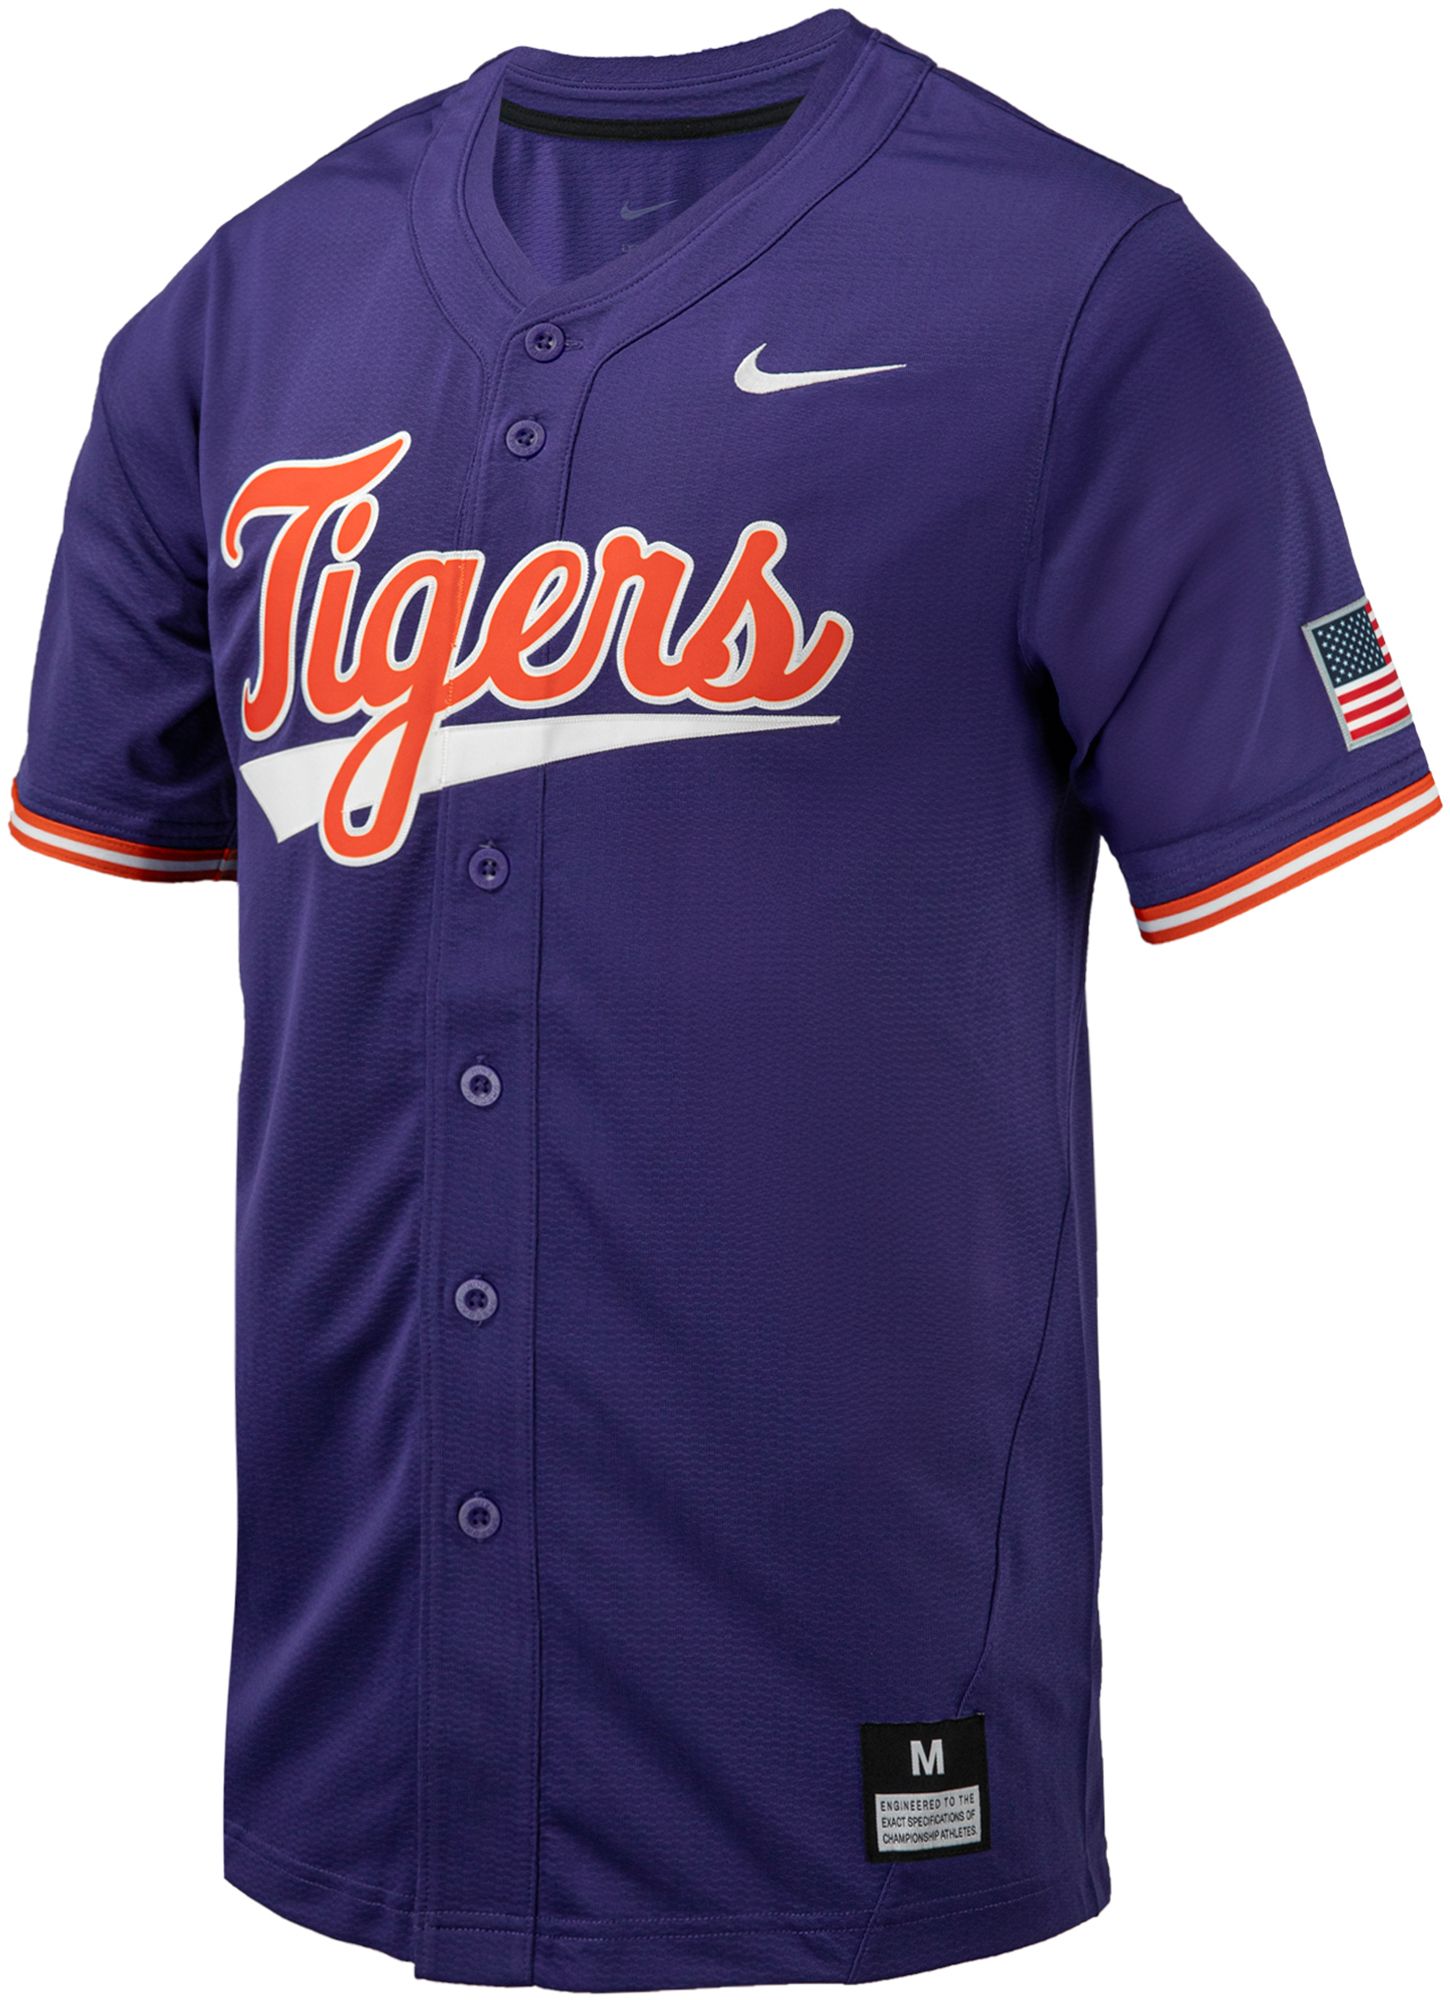 Nike Men's Clemson Tigers Regalia Full Button Replica Baseball Jersey